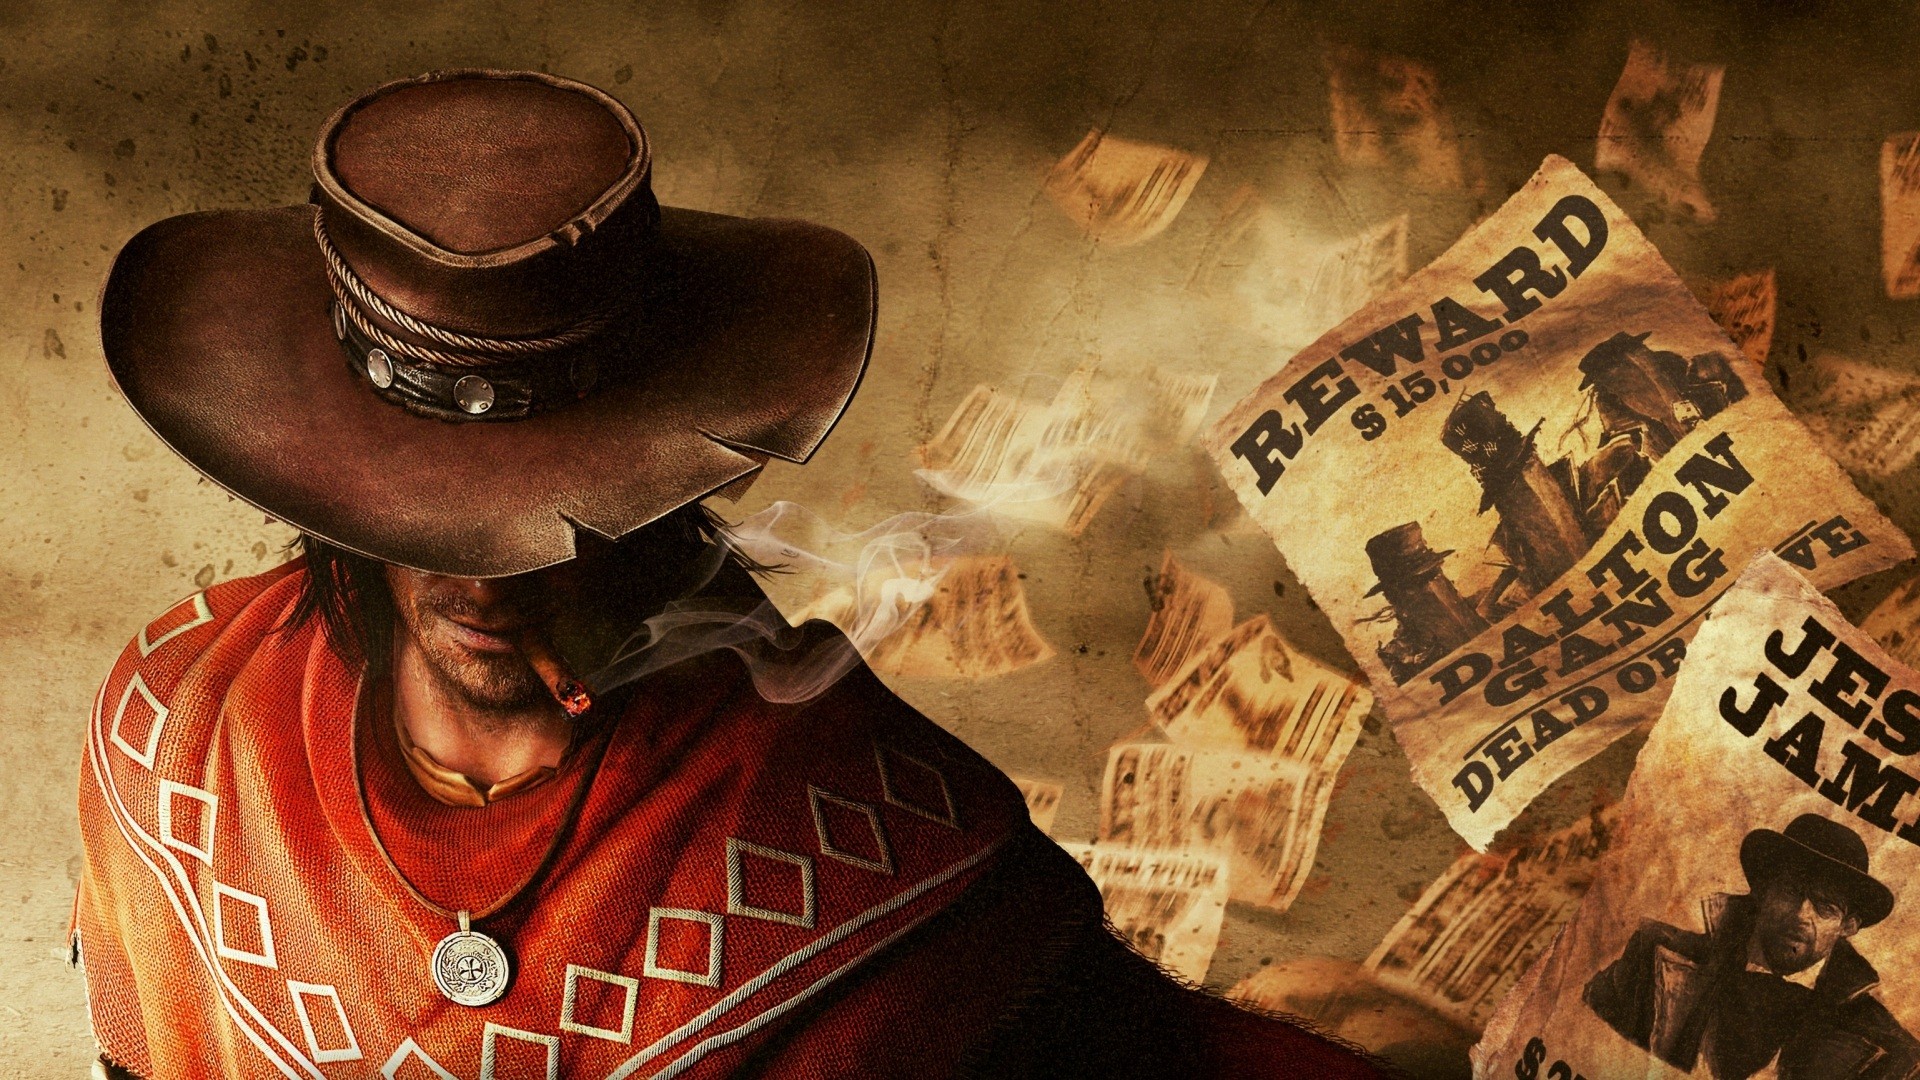  western bounty hunter Call Of Juarez wild west gunslinger cowboy